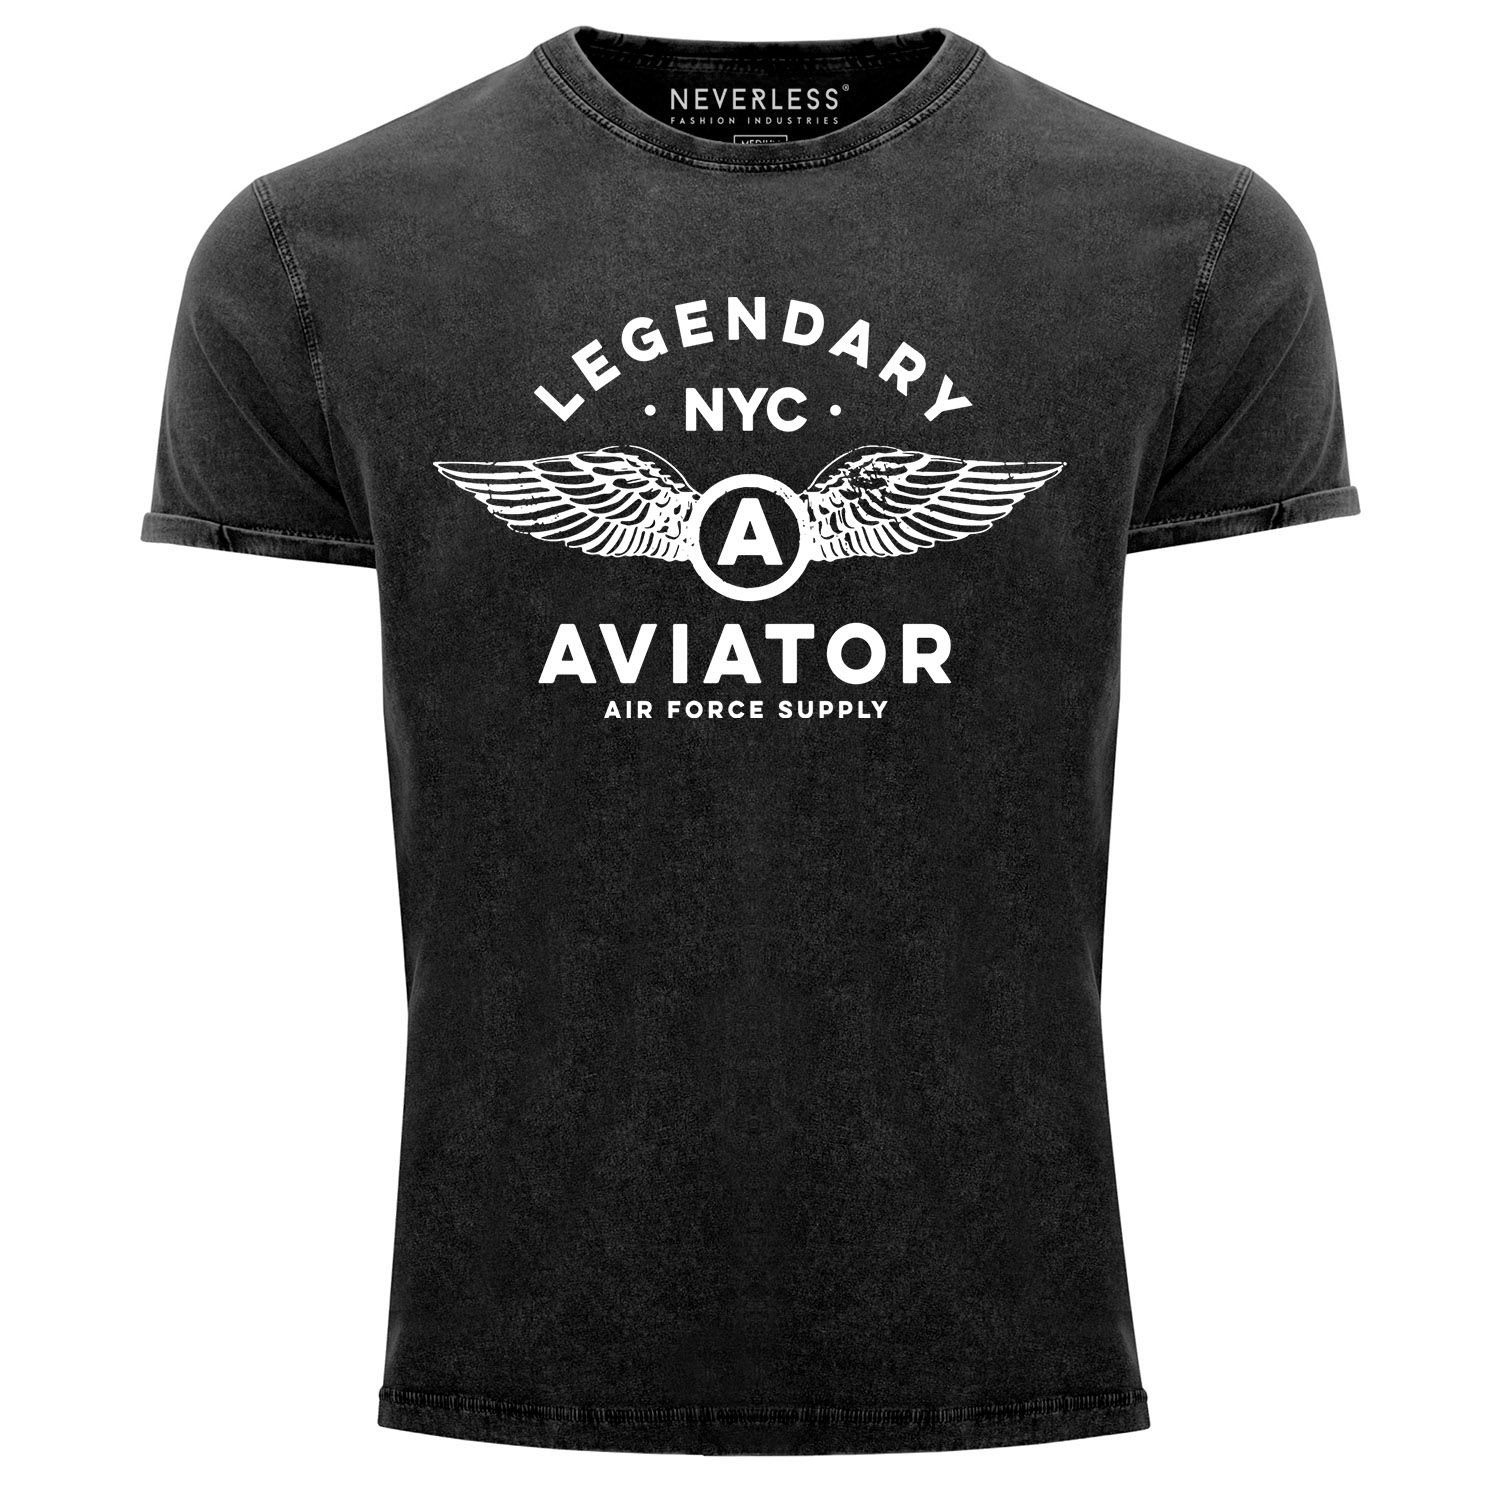 Neverless Print-Shirt Herren Vintage Shirt Legendary NYC Aviator Air Force Luftwaffe Flügel Printshirt Used Look Slim Fit Neverless® mit Print schwarz